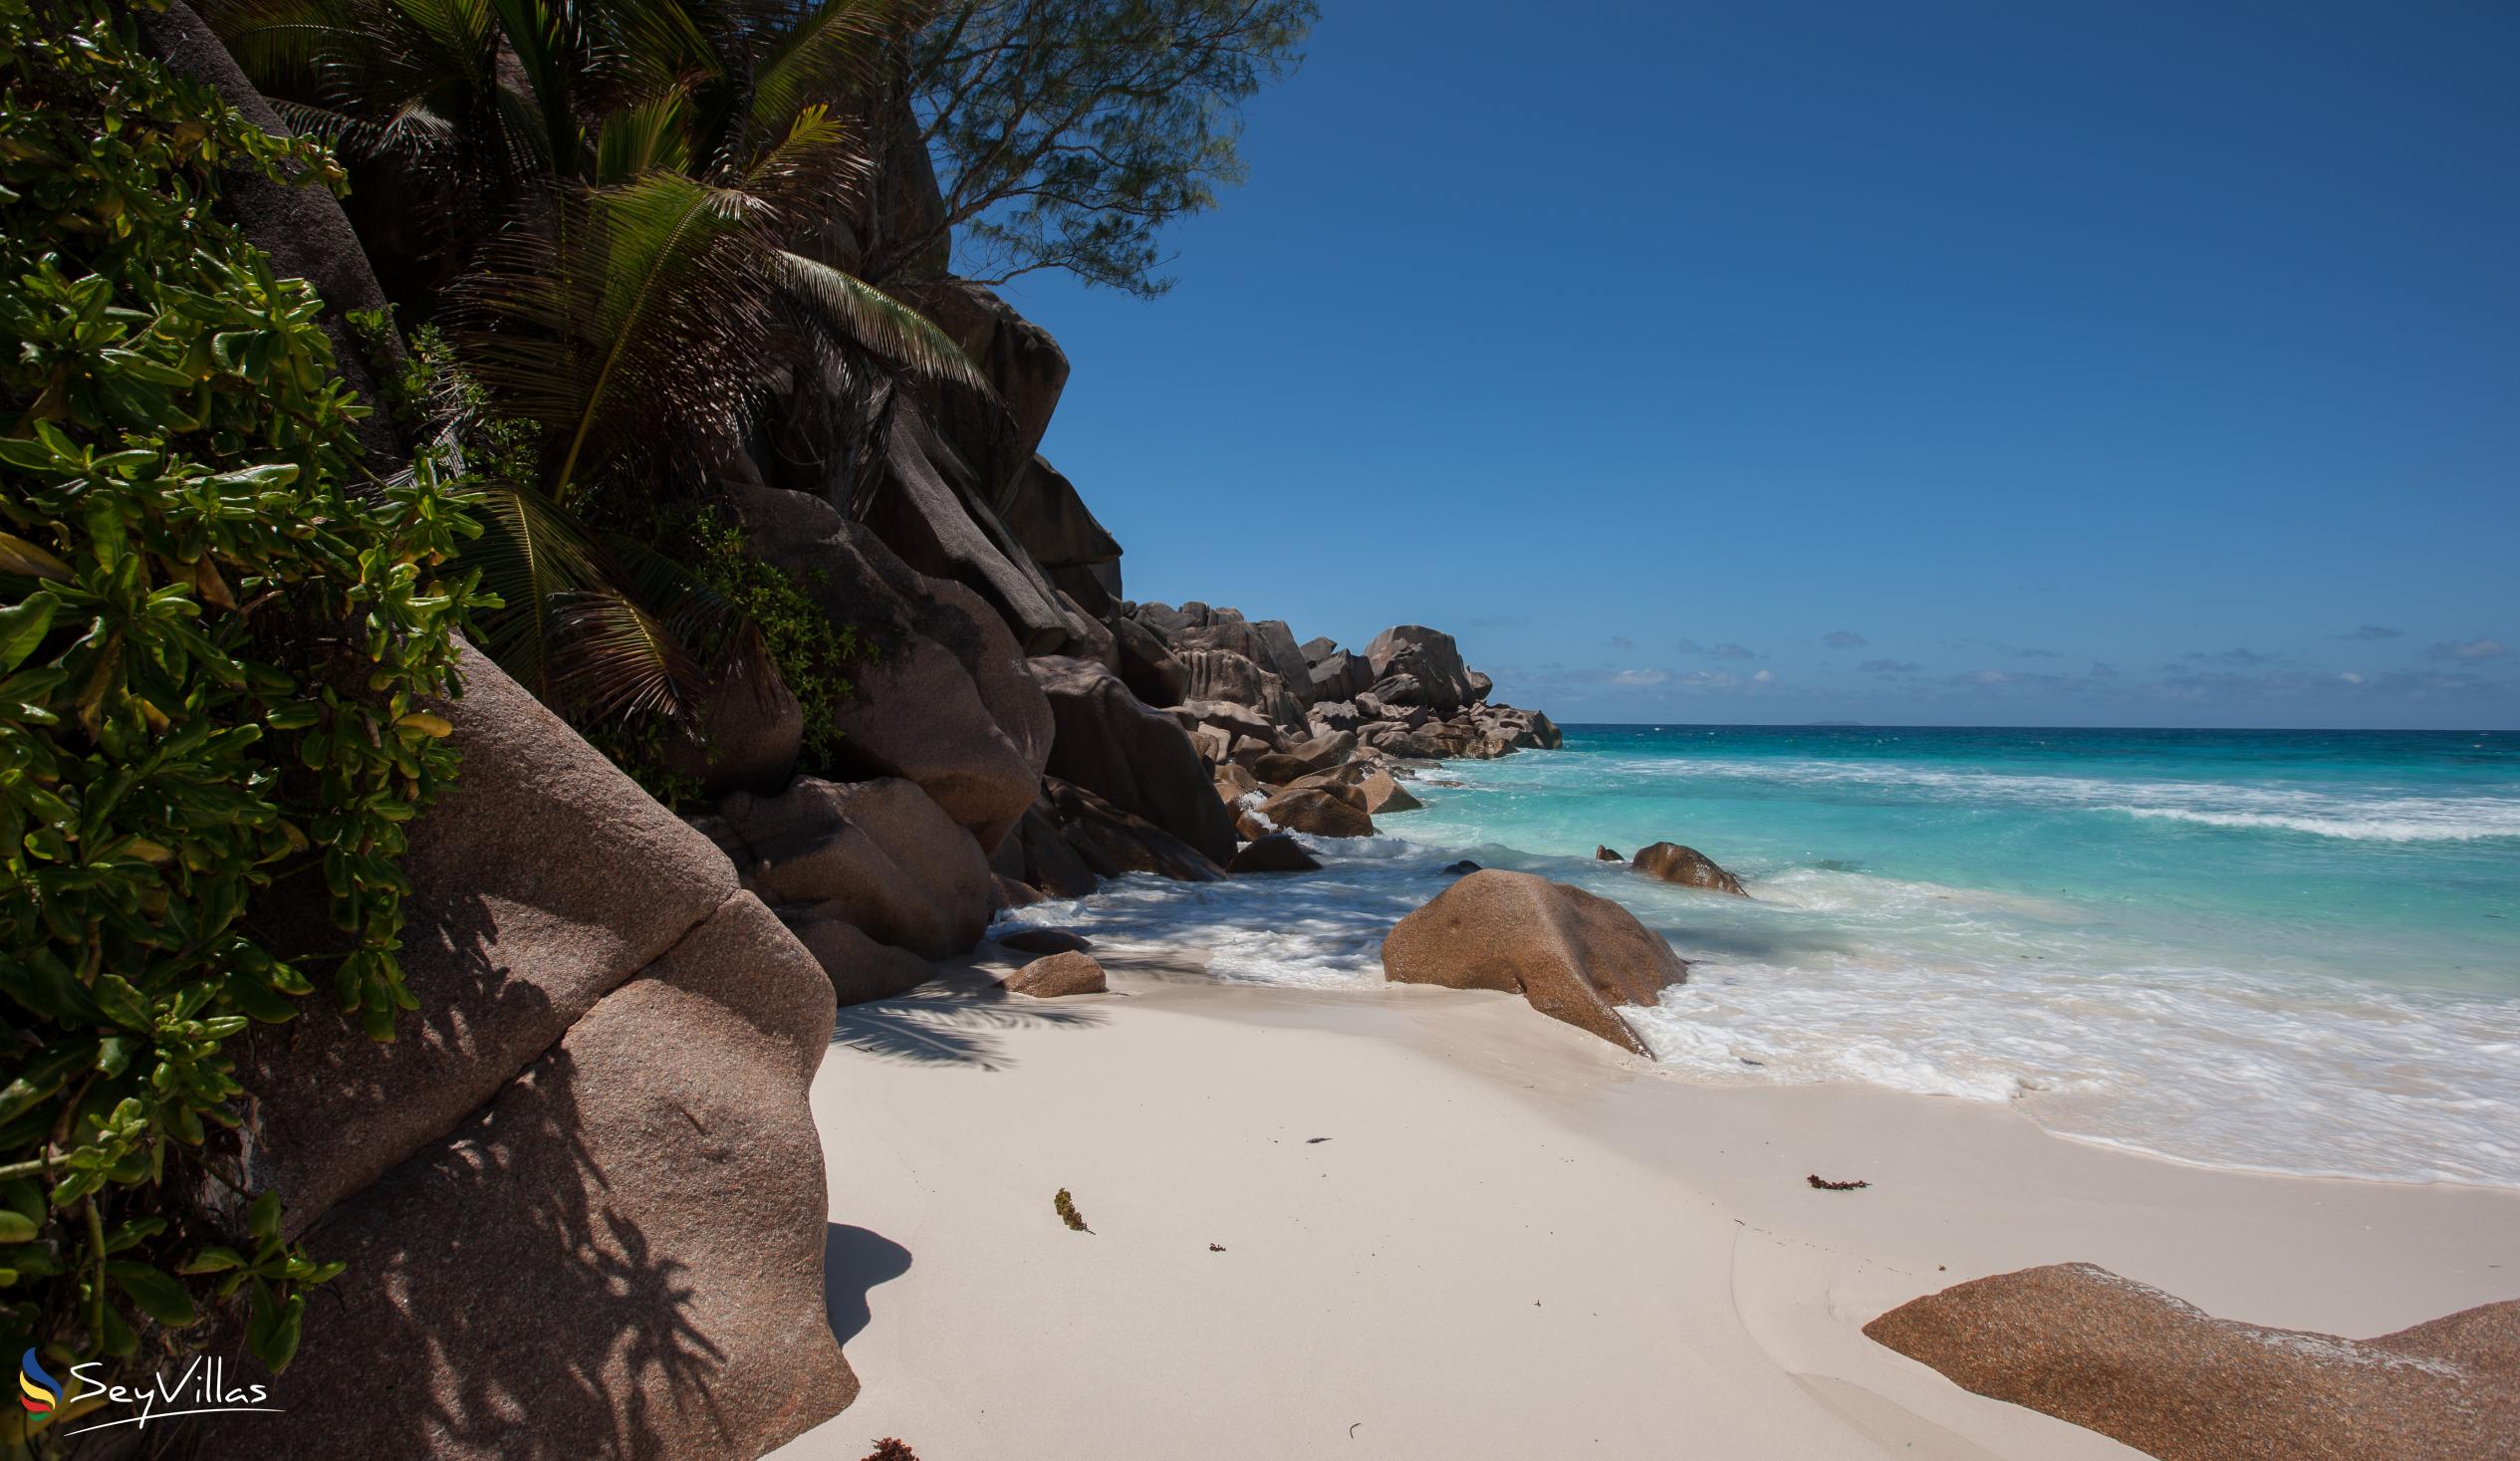 Photo 98: Casa de Leela - Beaches - La Digue (Seychelles)